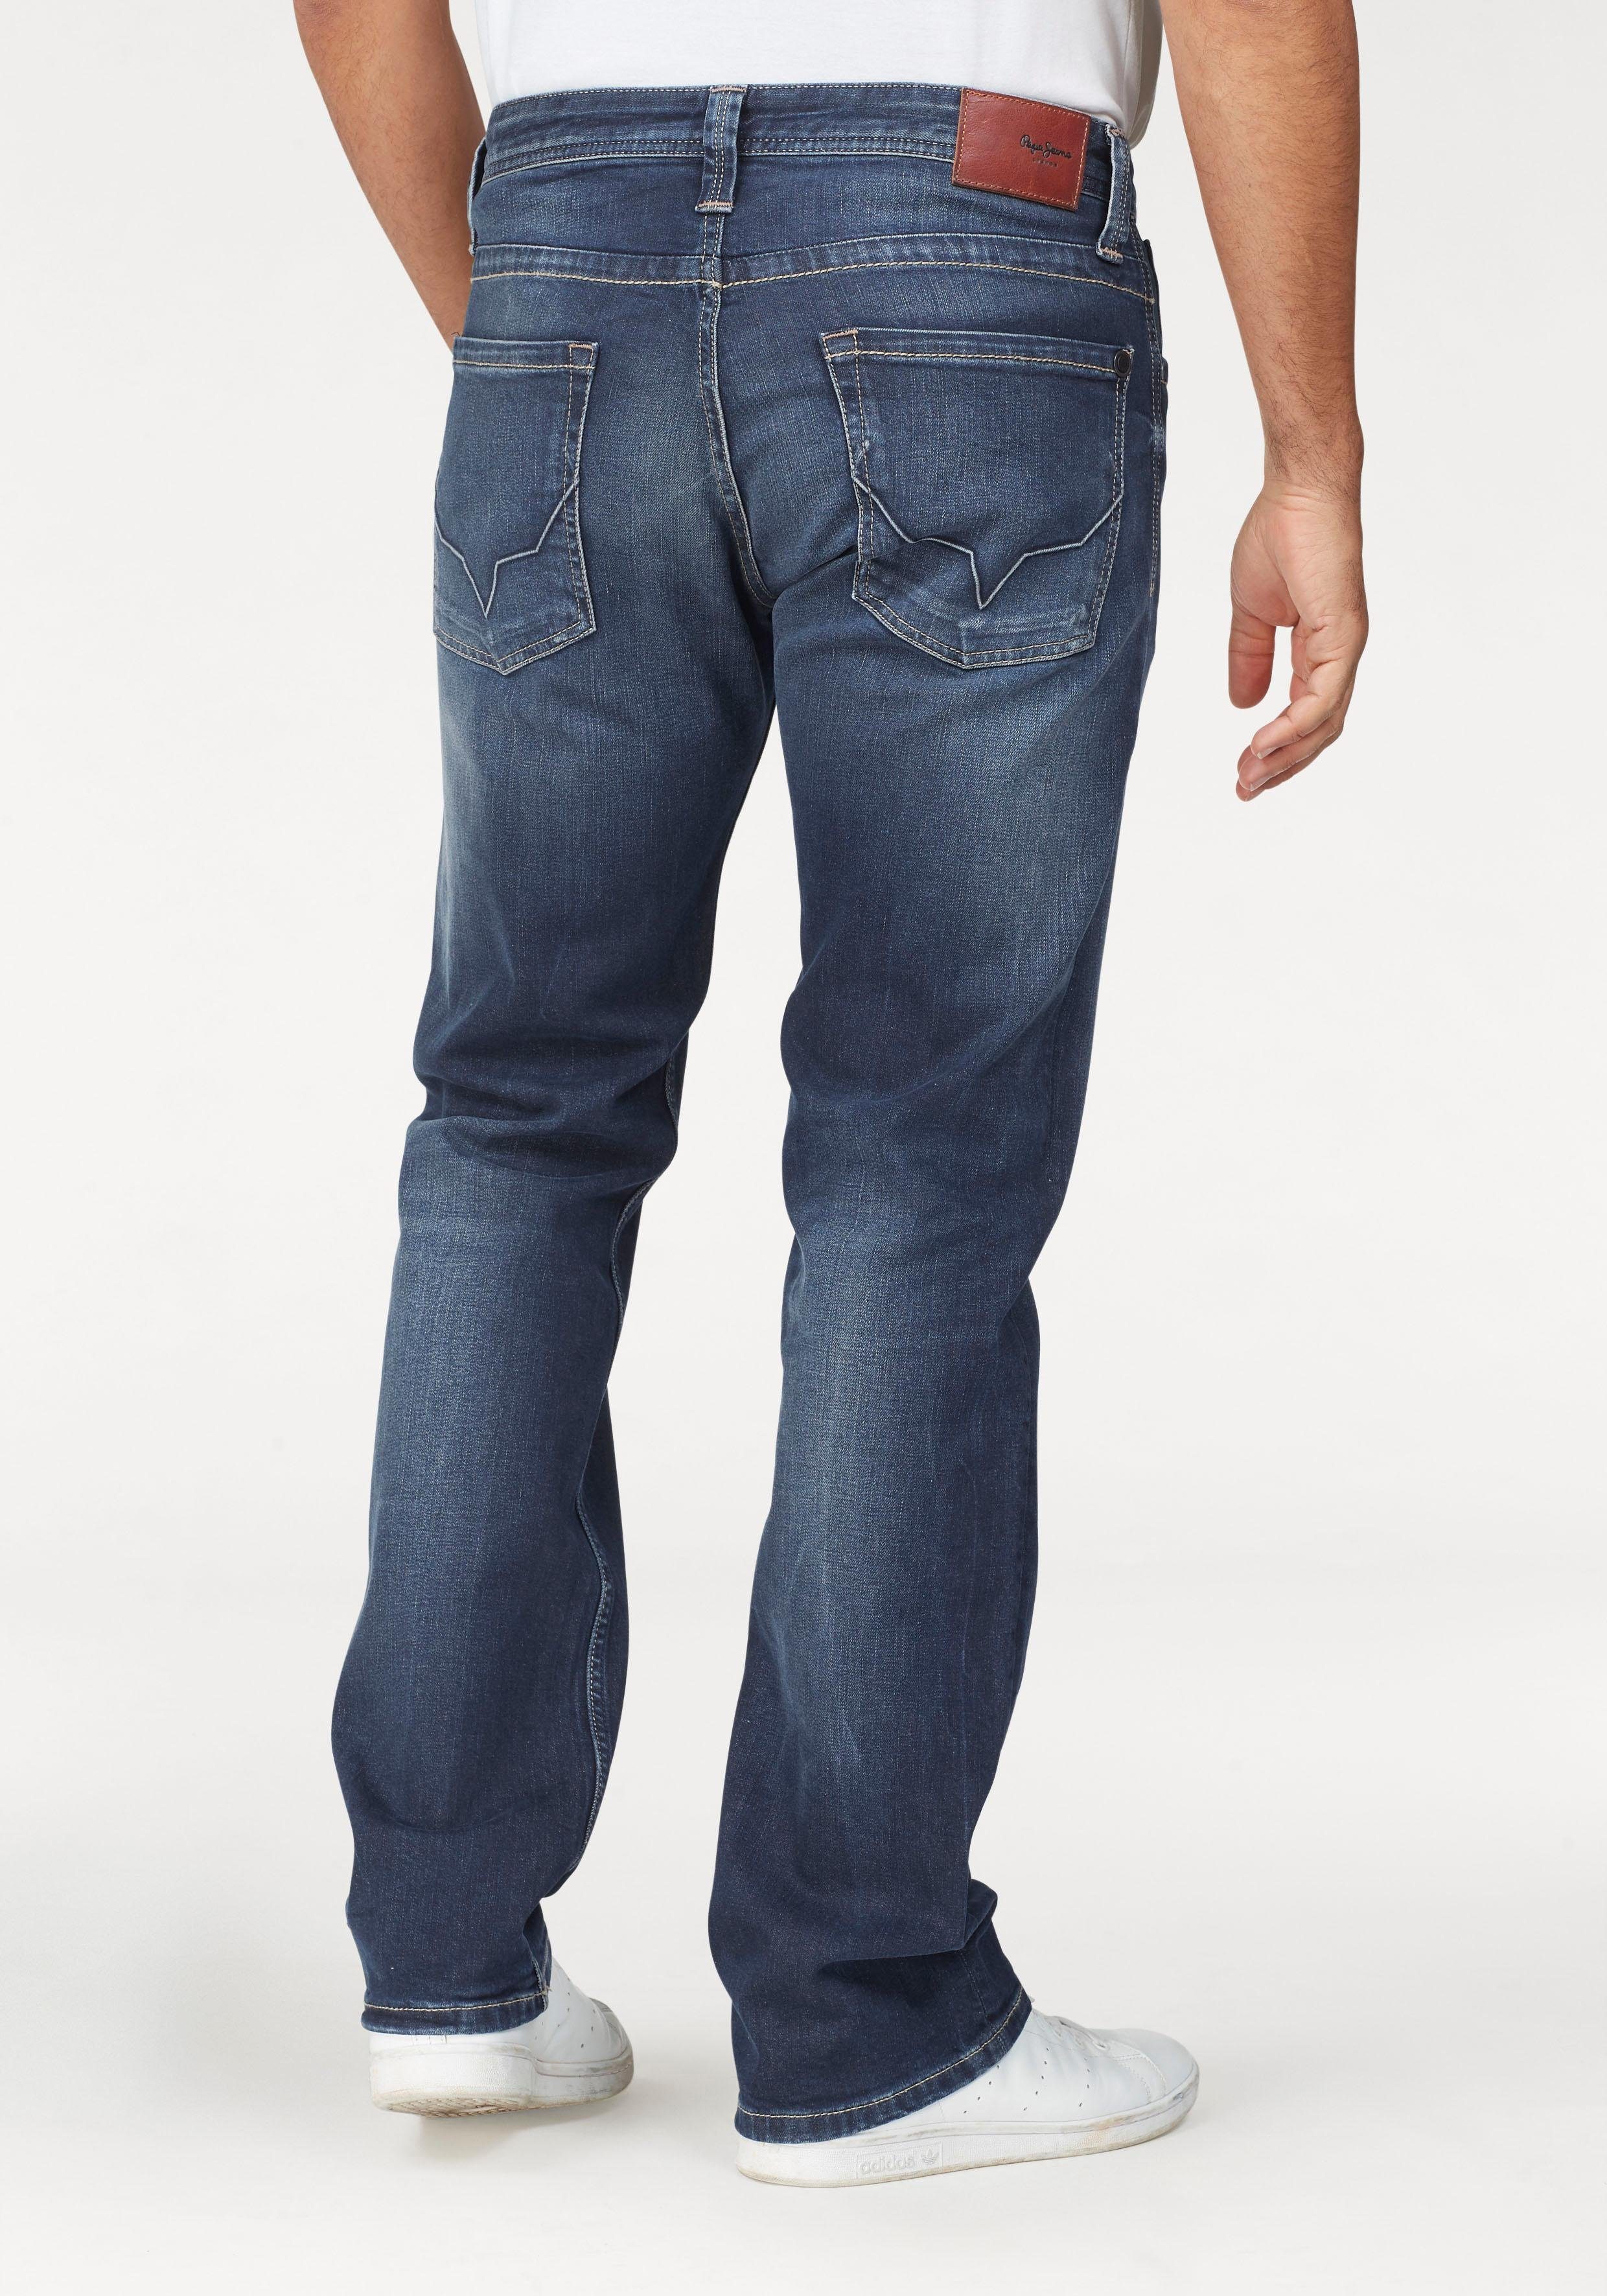 Pepe Jeans Straight-Jeans KINGSTON ZIP in 5-Pocket-Form dark-used